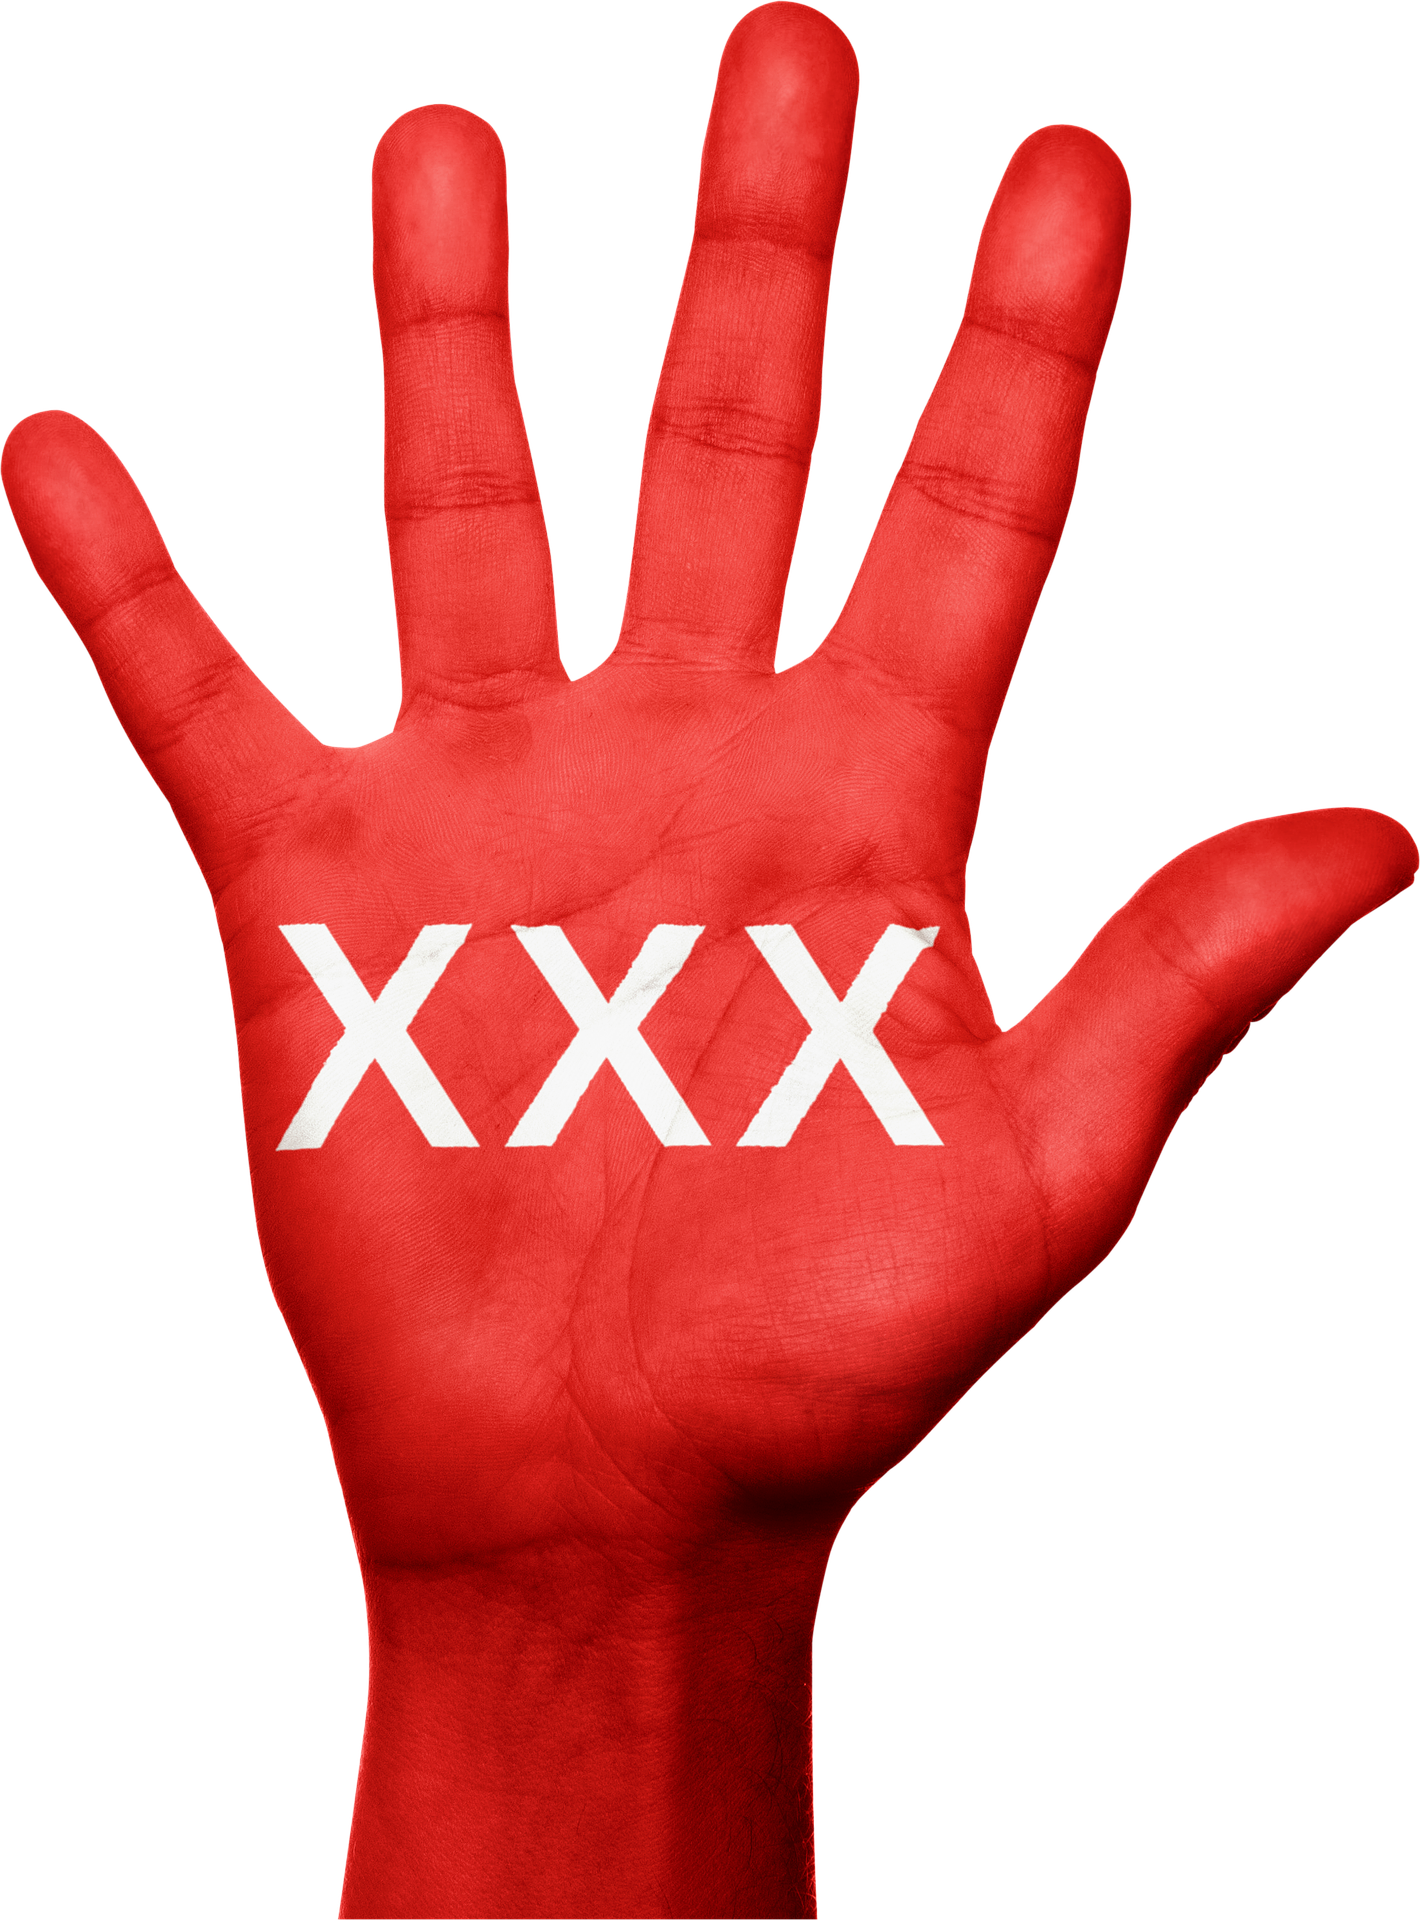 Hand with XX written representing masturbation